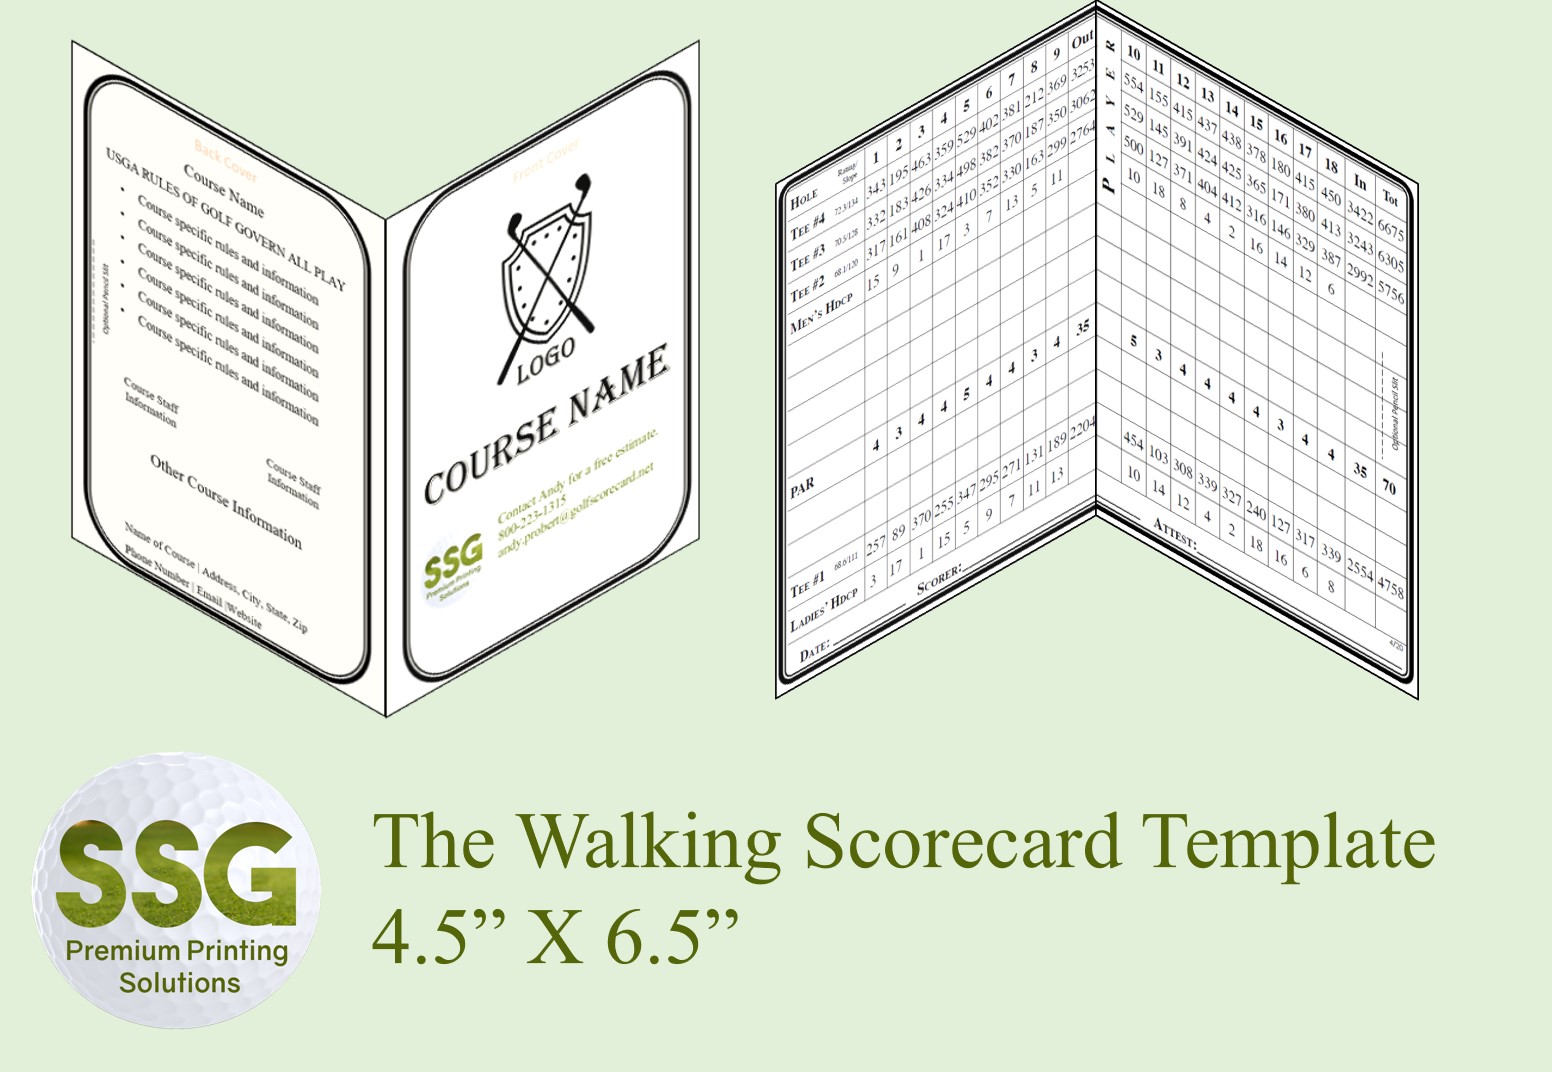 The Walking Scorecard